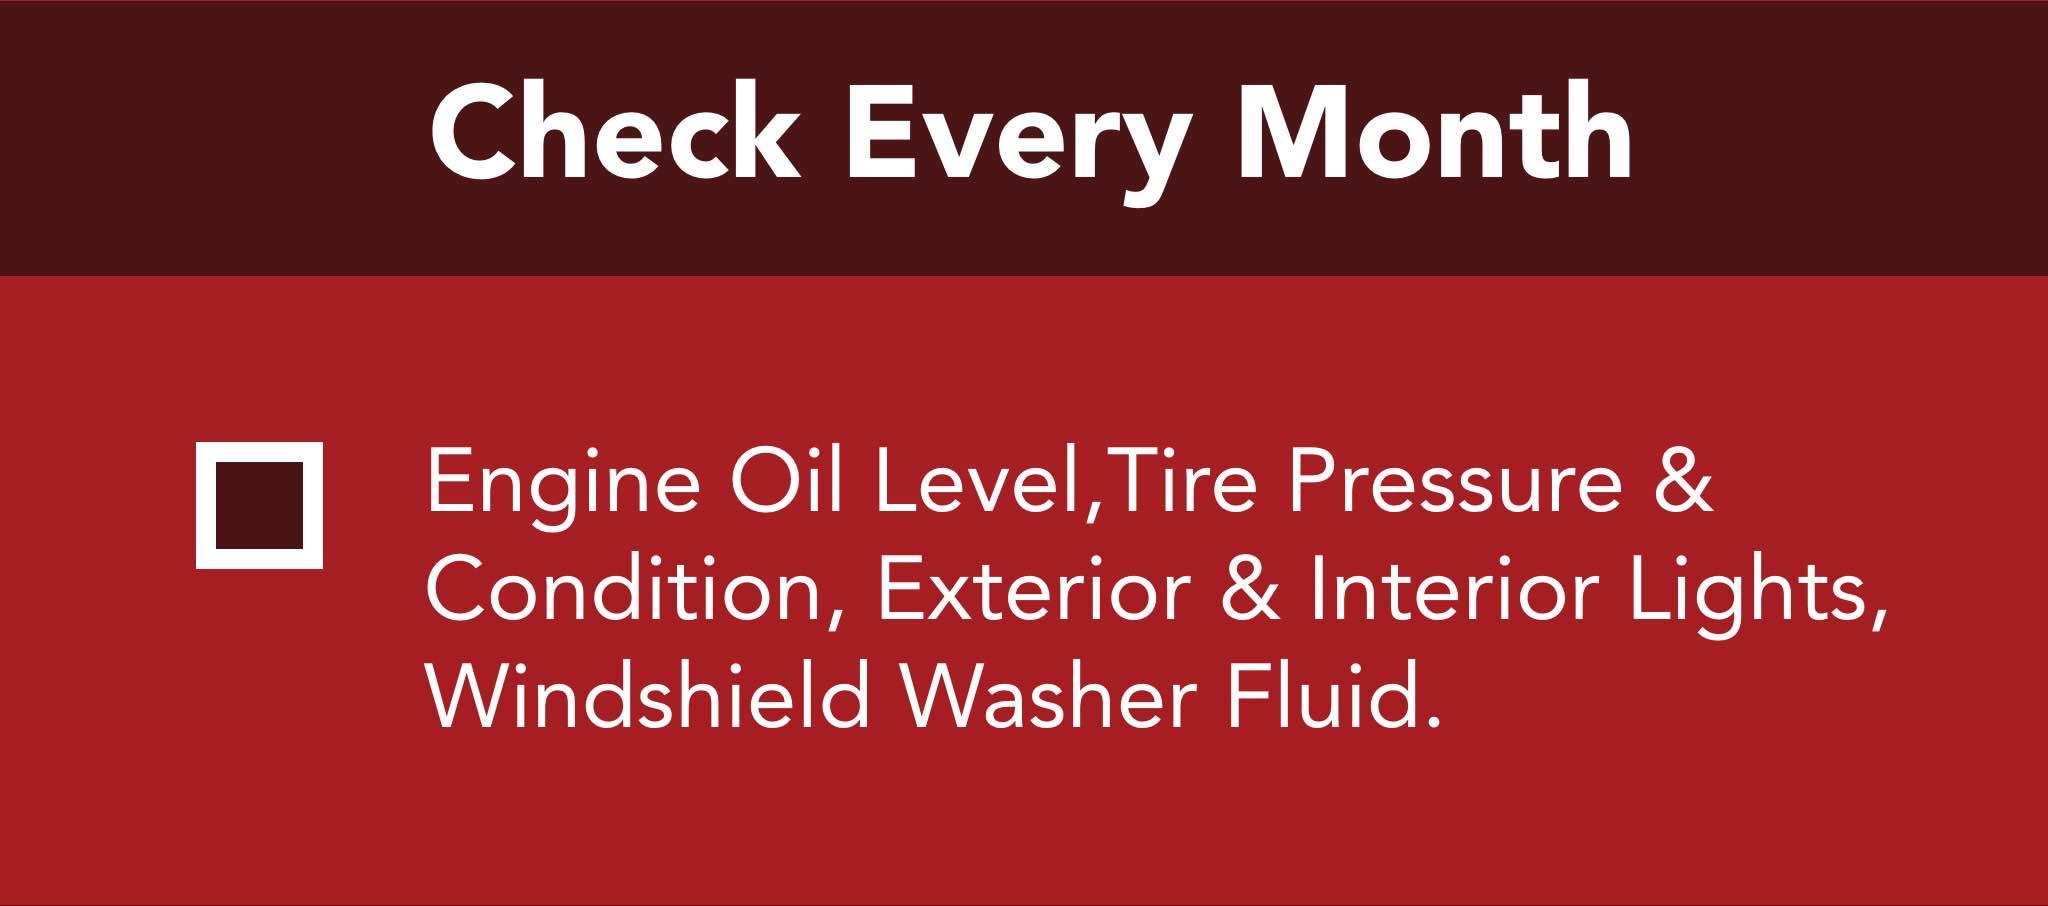 Engine Oil Level,Tire Pressure & Condition, Exterior & Interior Lights, Windshield Washer Fluid.